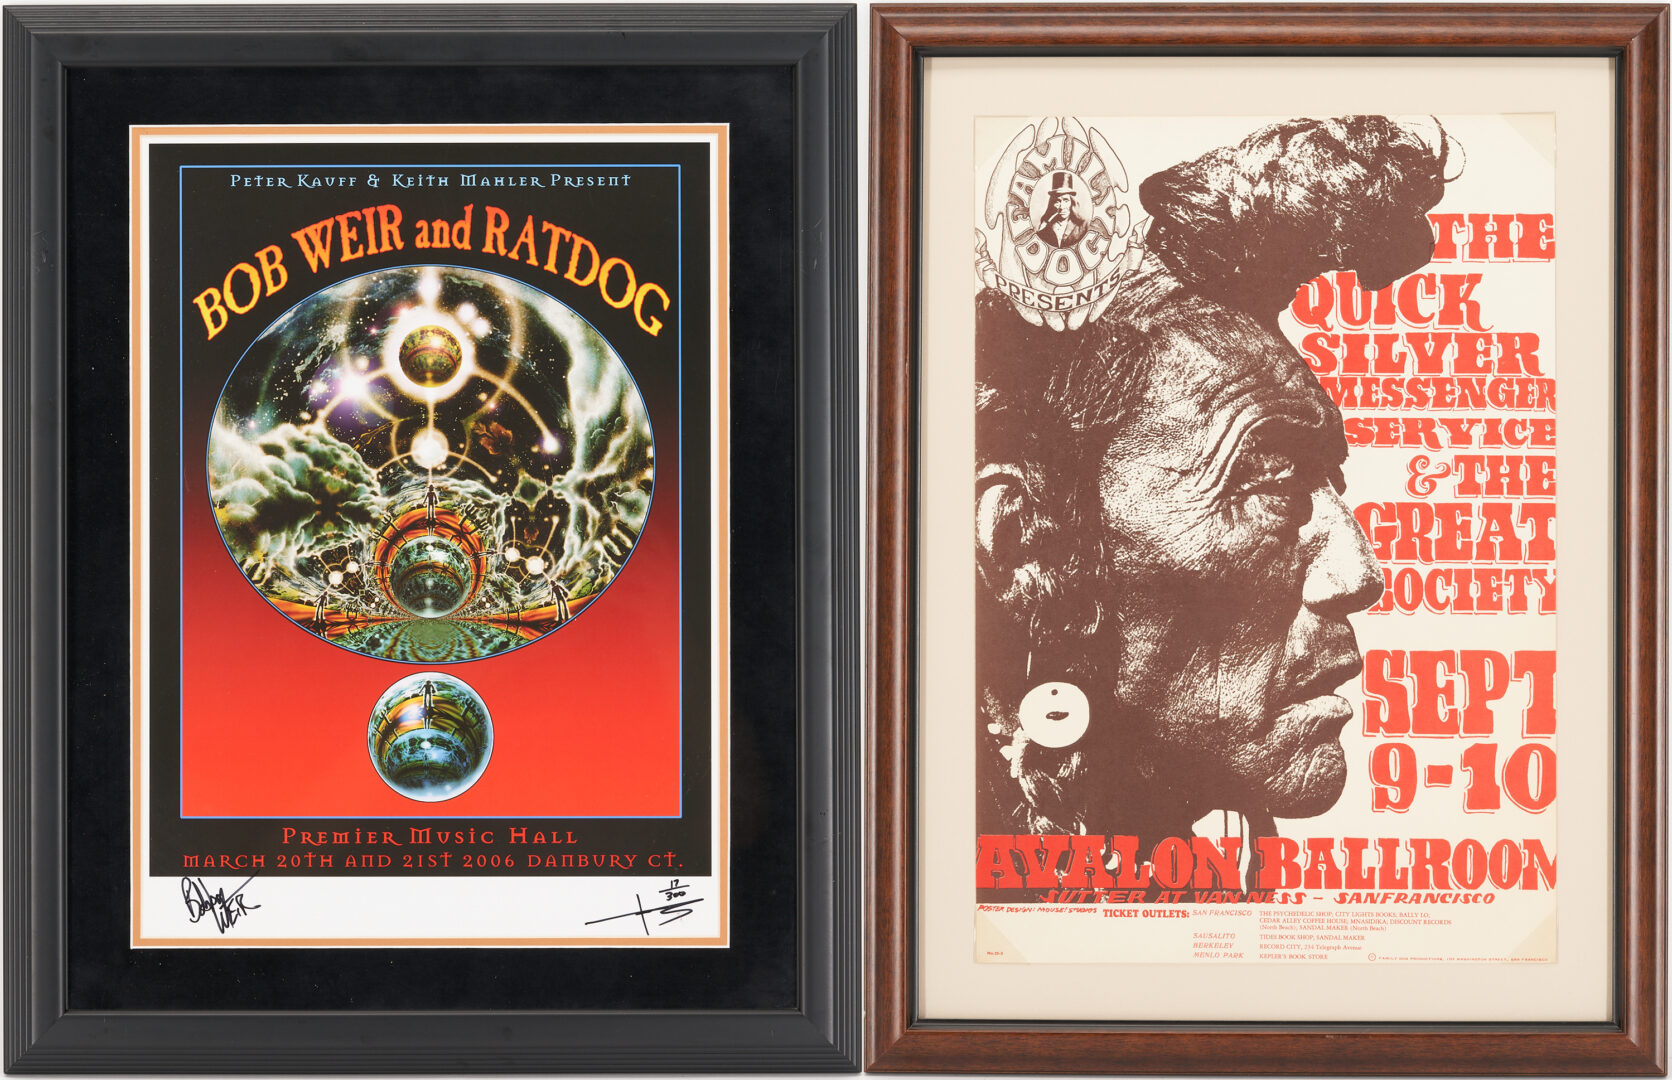 Lot 618: 2 Concert Posters, 1966 Quicksilver Msgr. Service plus Signed 2006 Bob Weir/ Ratdog